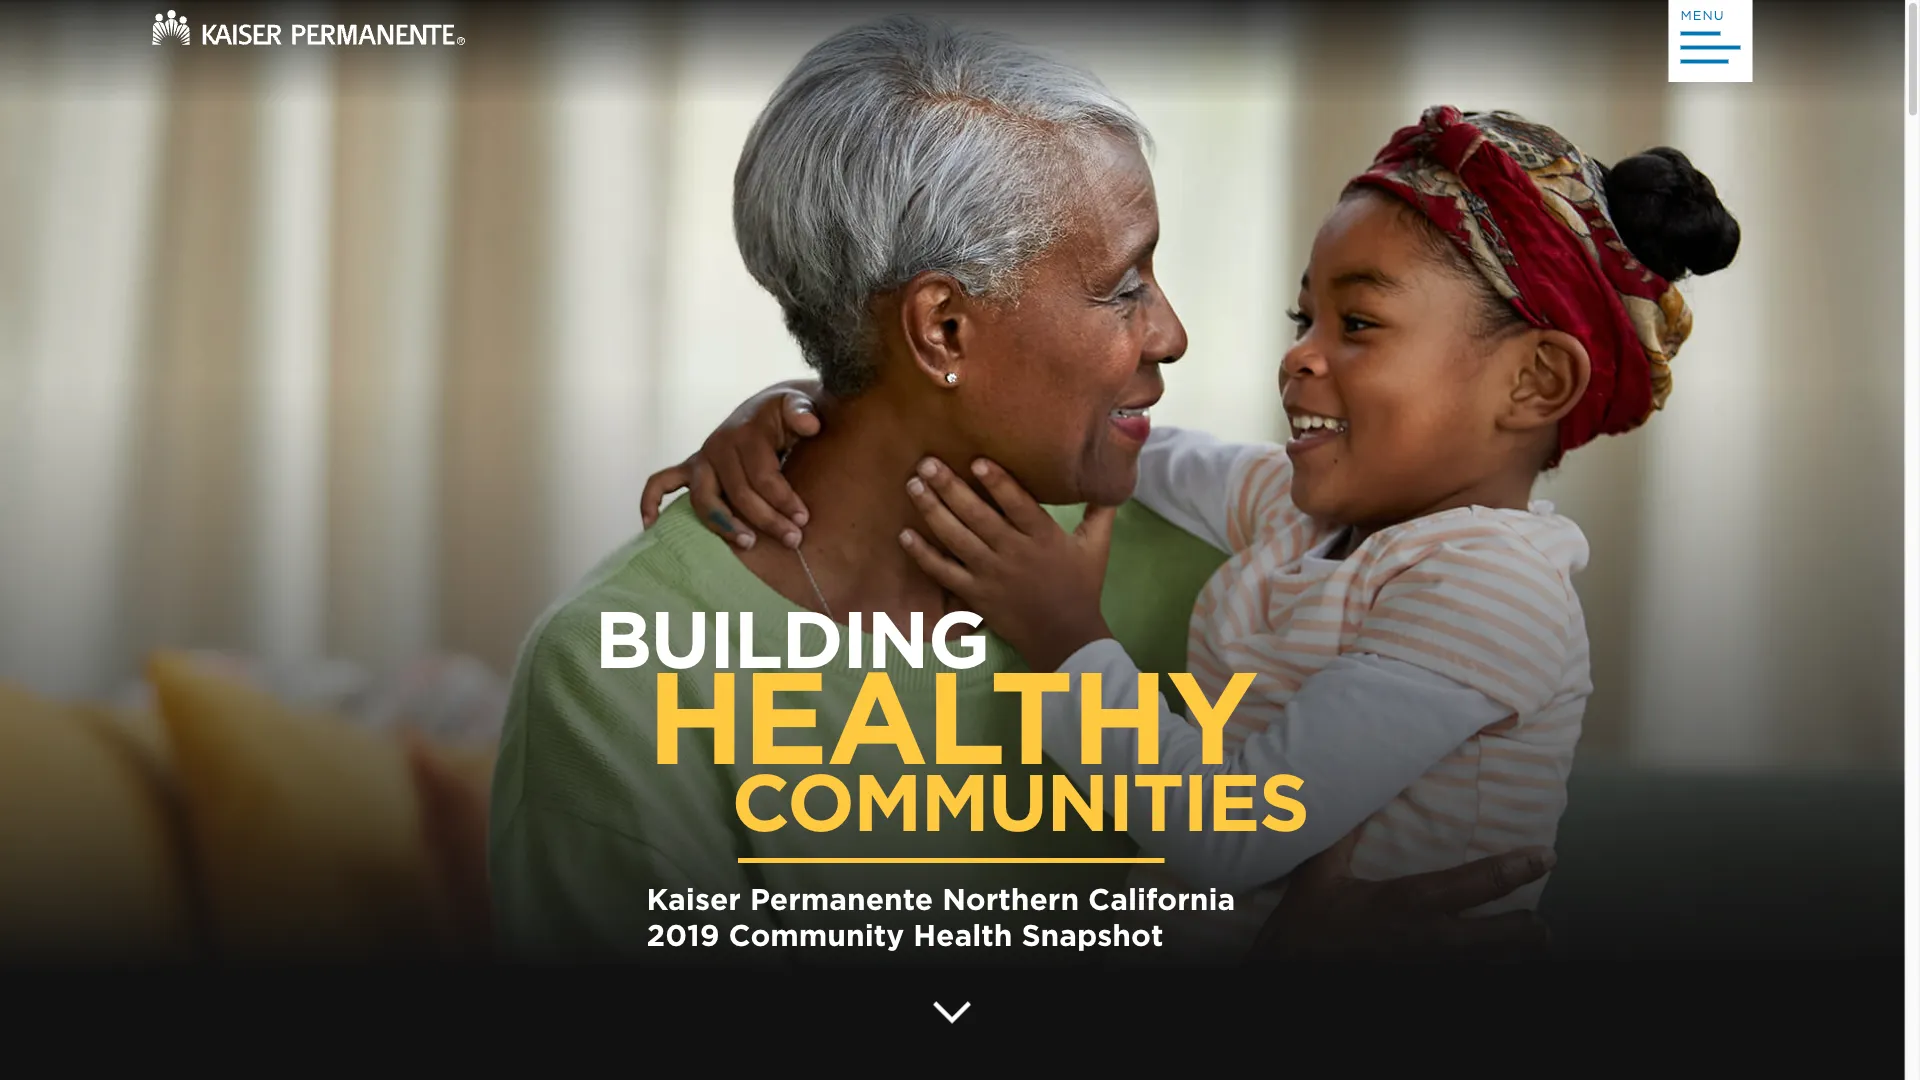 Entry screen of 2019 Community Health Snapshot